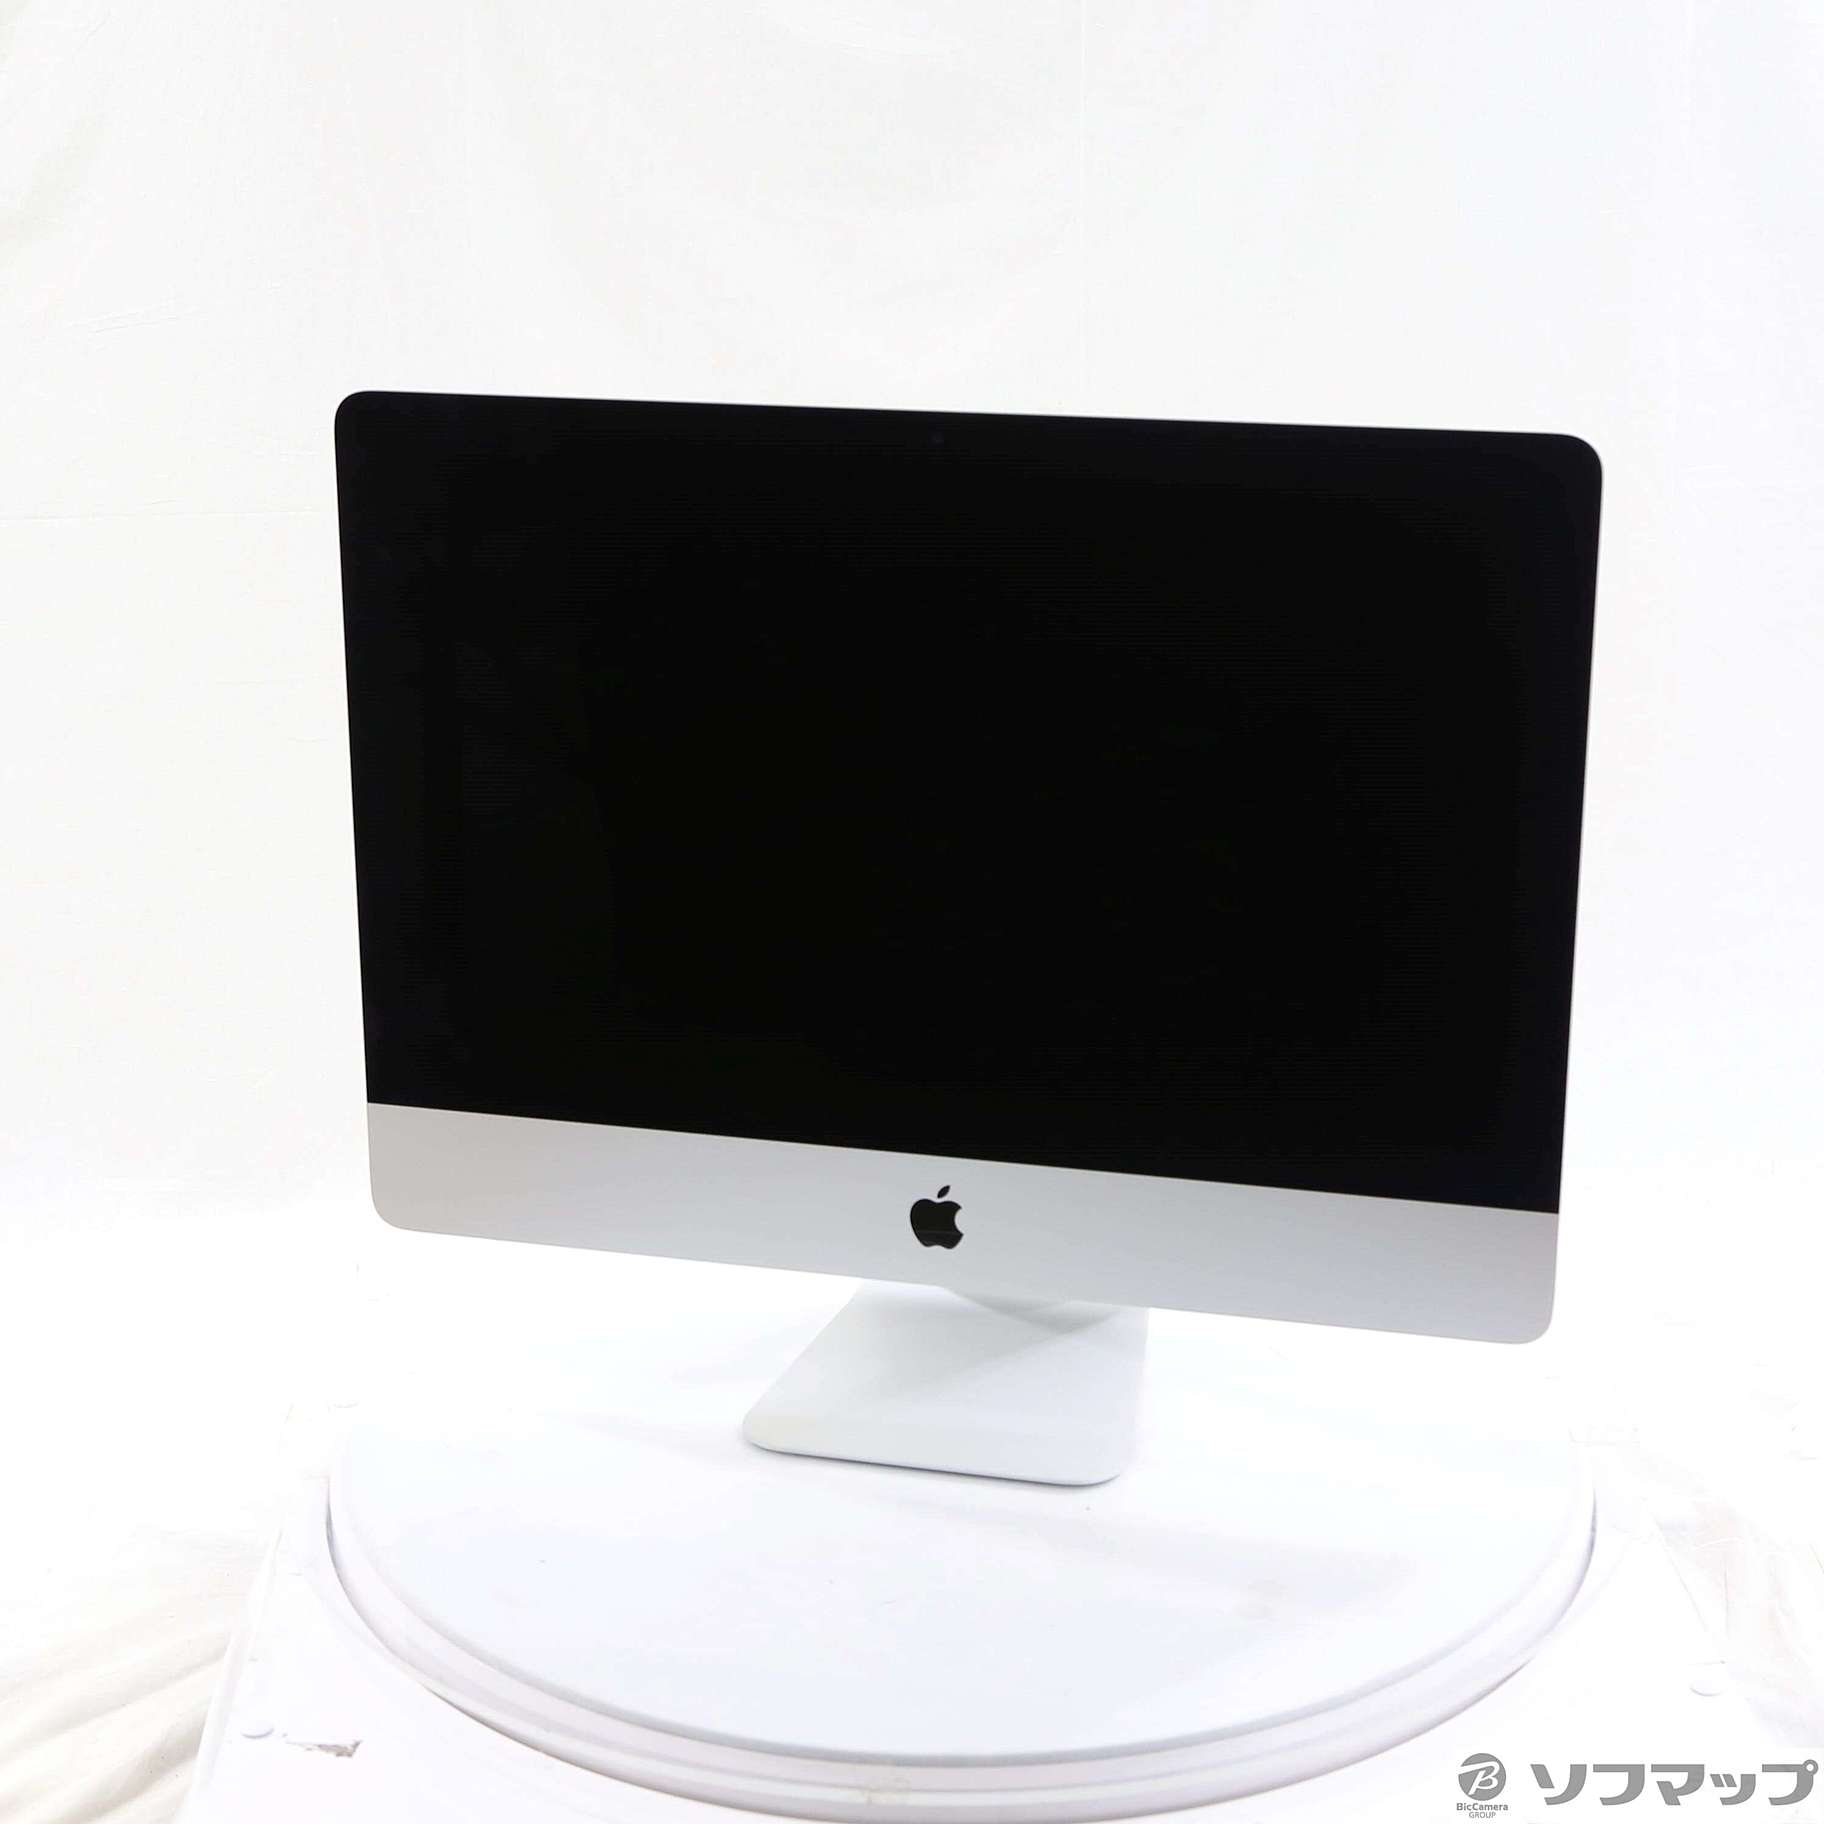 中古品〕 iMac 21.5-inch Late 2015 MK442J／A Core_i5 2.8GHz 16GB ...